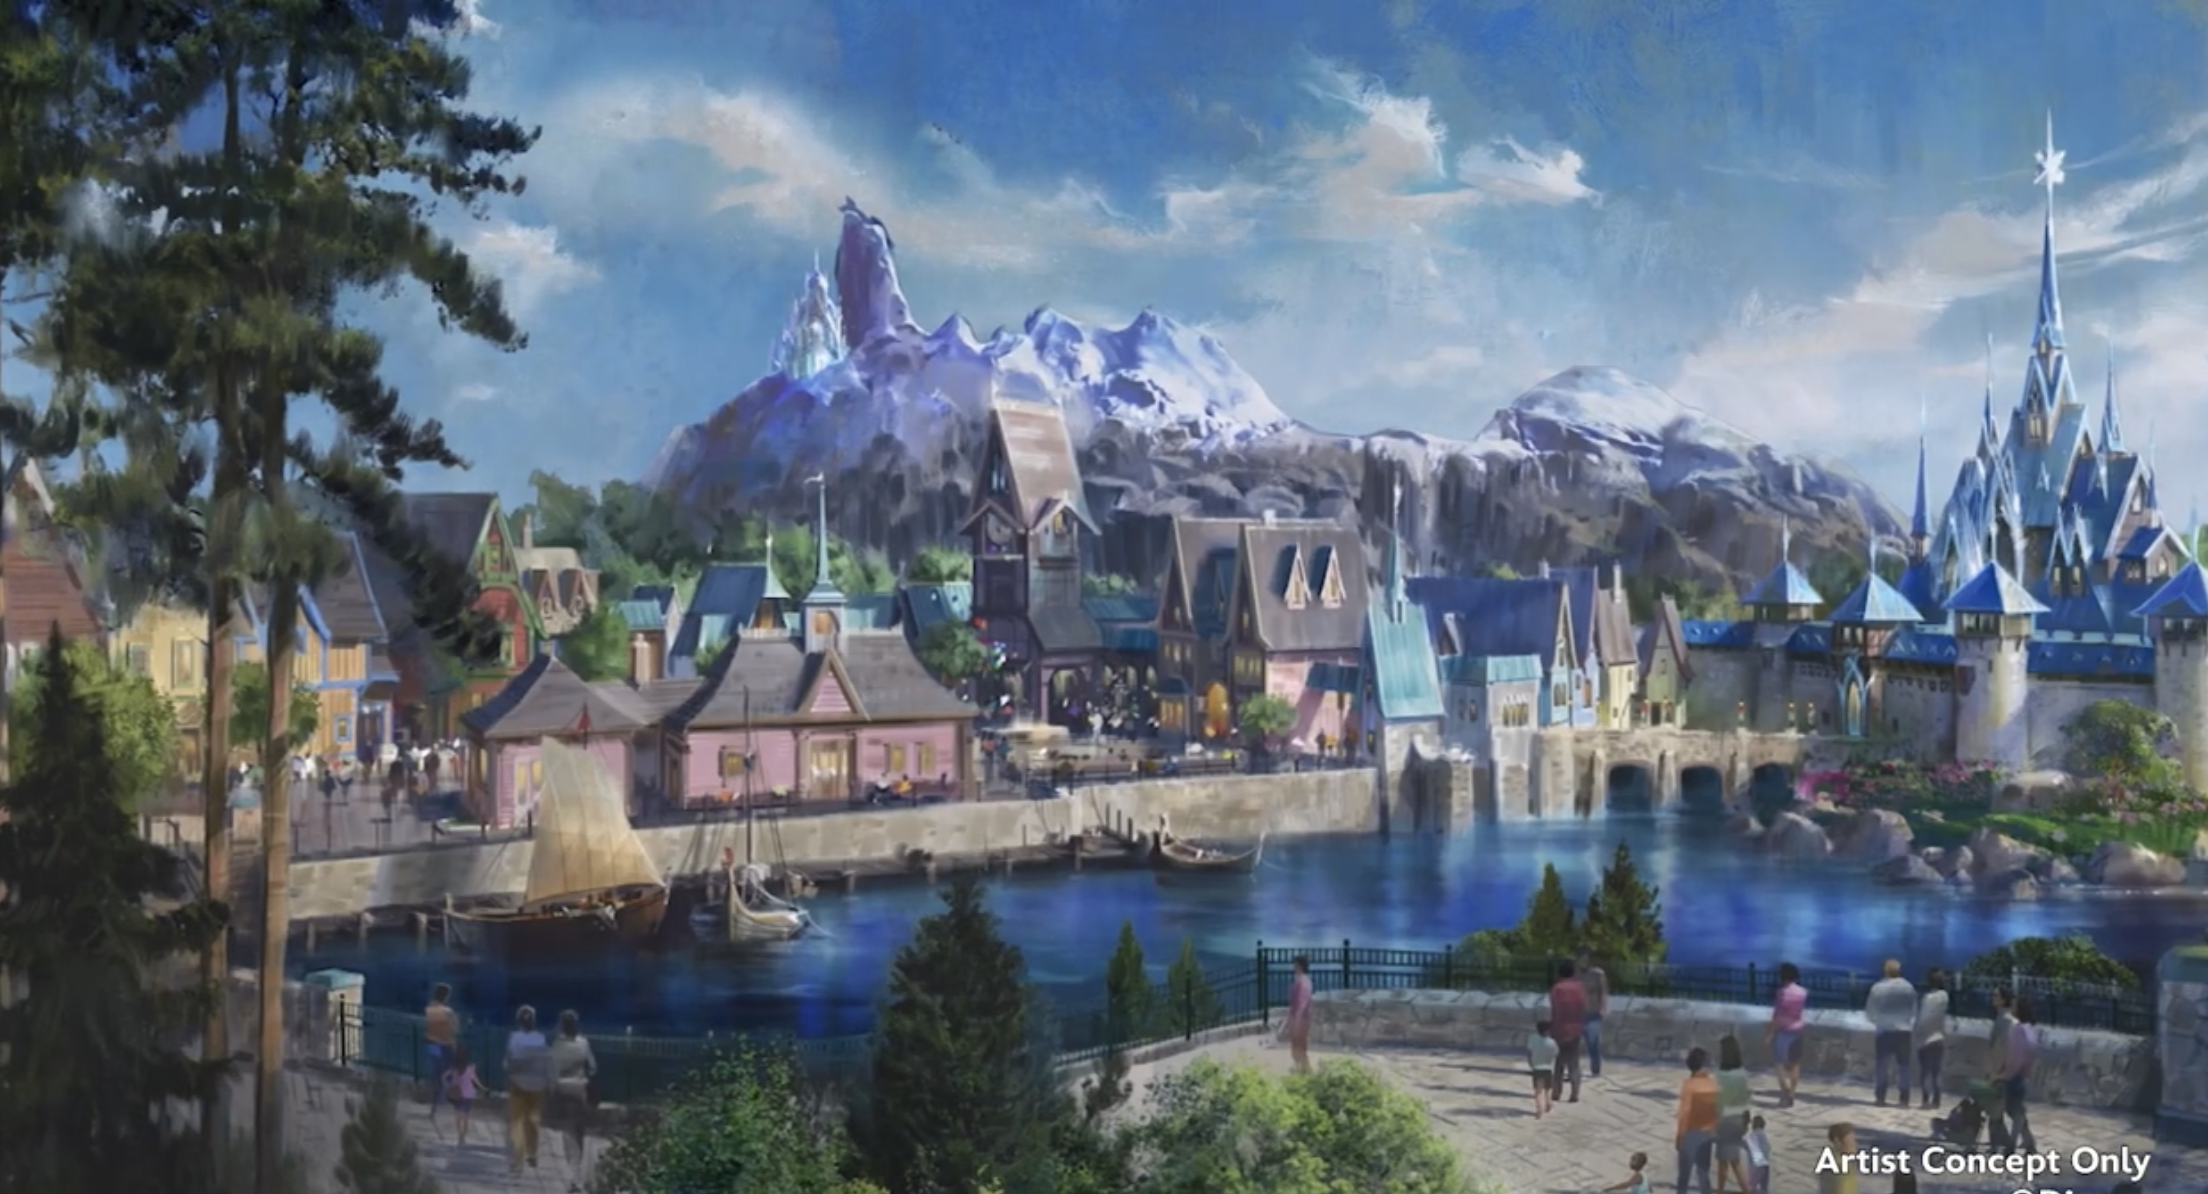 The Kingdom of Arendelle “Frozen Land” at Disneyland Paris Update from D23, 2023